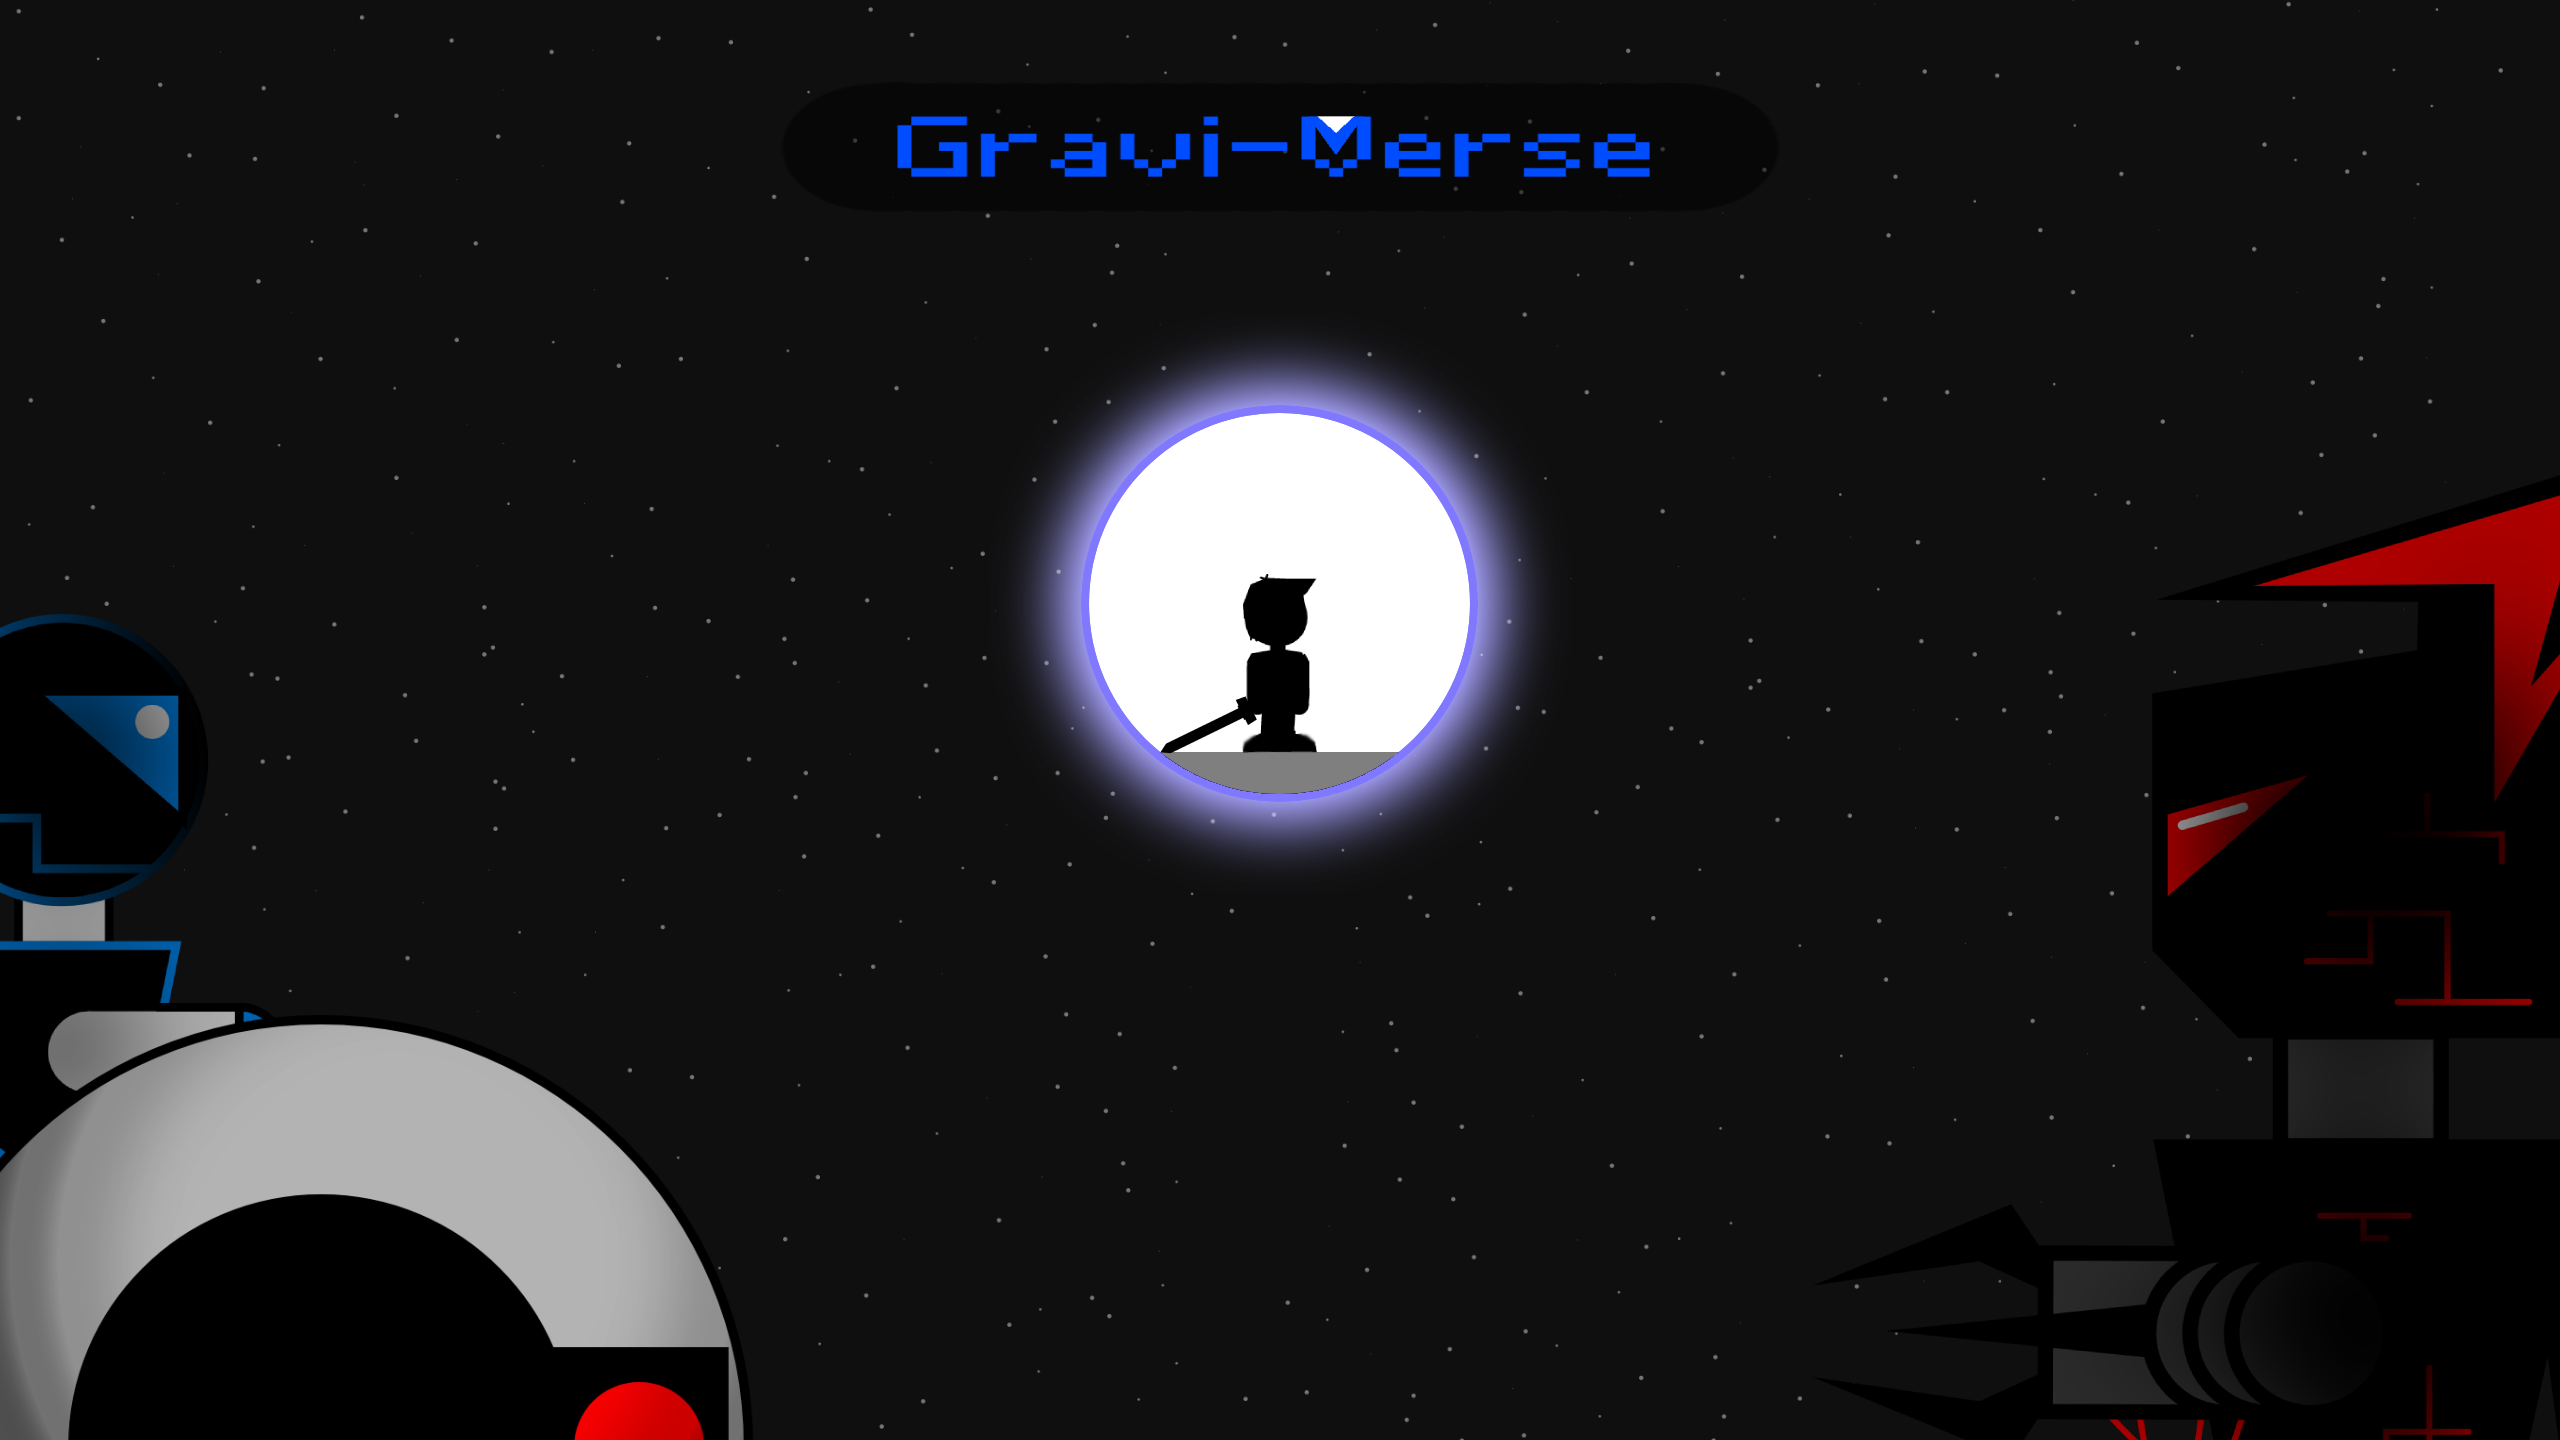 The official Gravi-Verse artwork